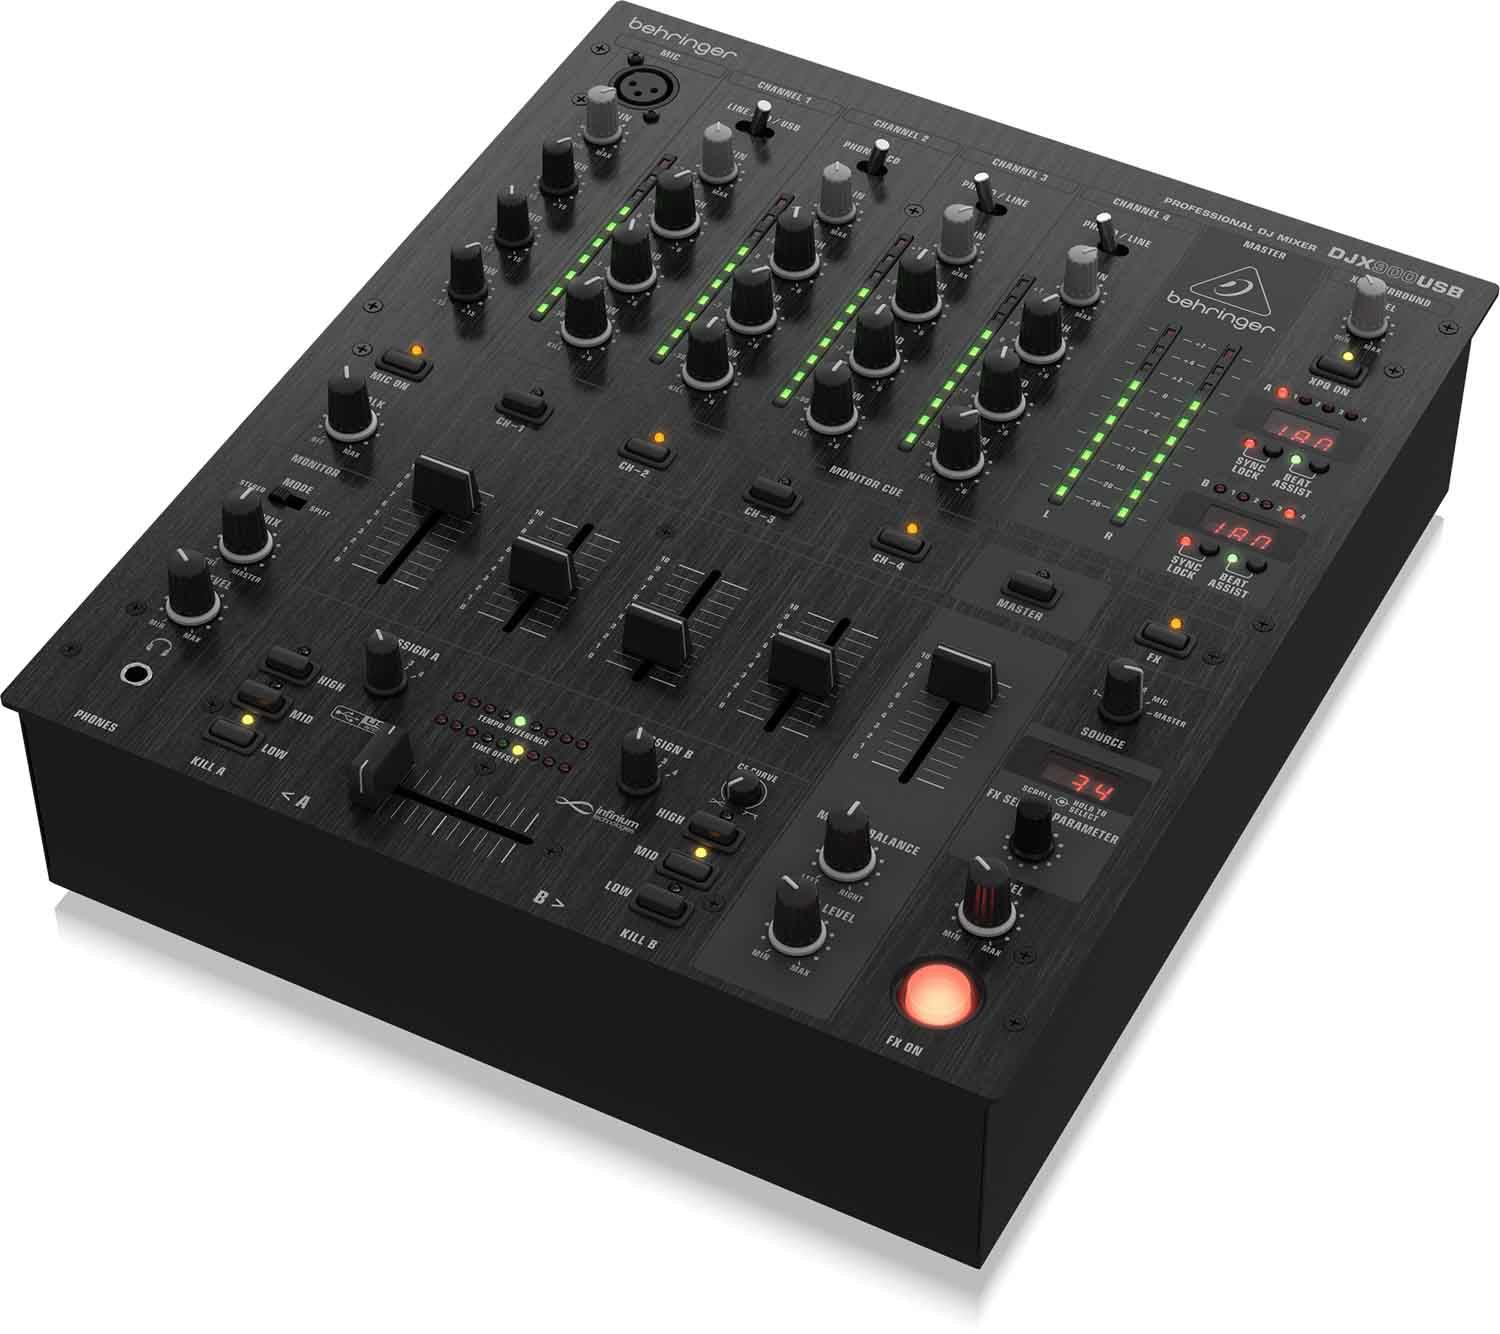 Behringer DJX900USB Professional 5-Channel DJ Mixer with Advanced Digital Effects - Hollywood DJ